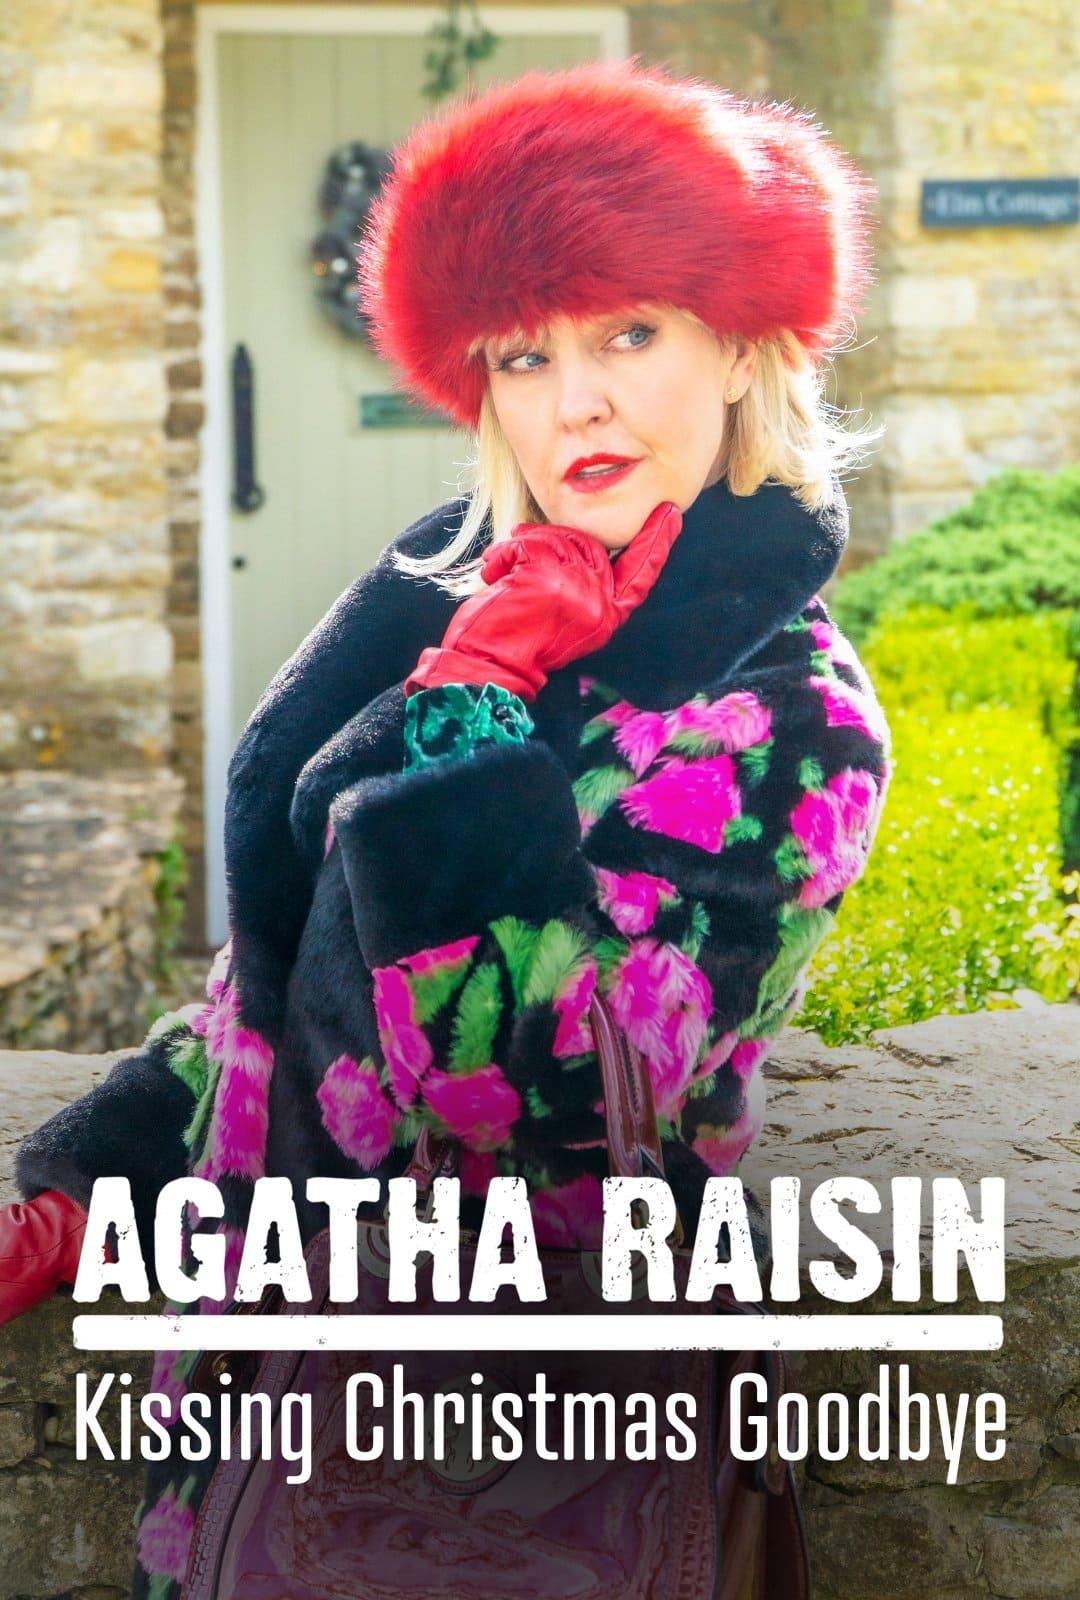 Agatha Raisin: Kissing Christmas Goodbye poster